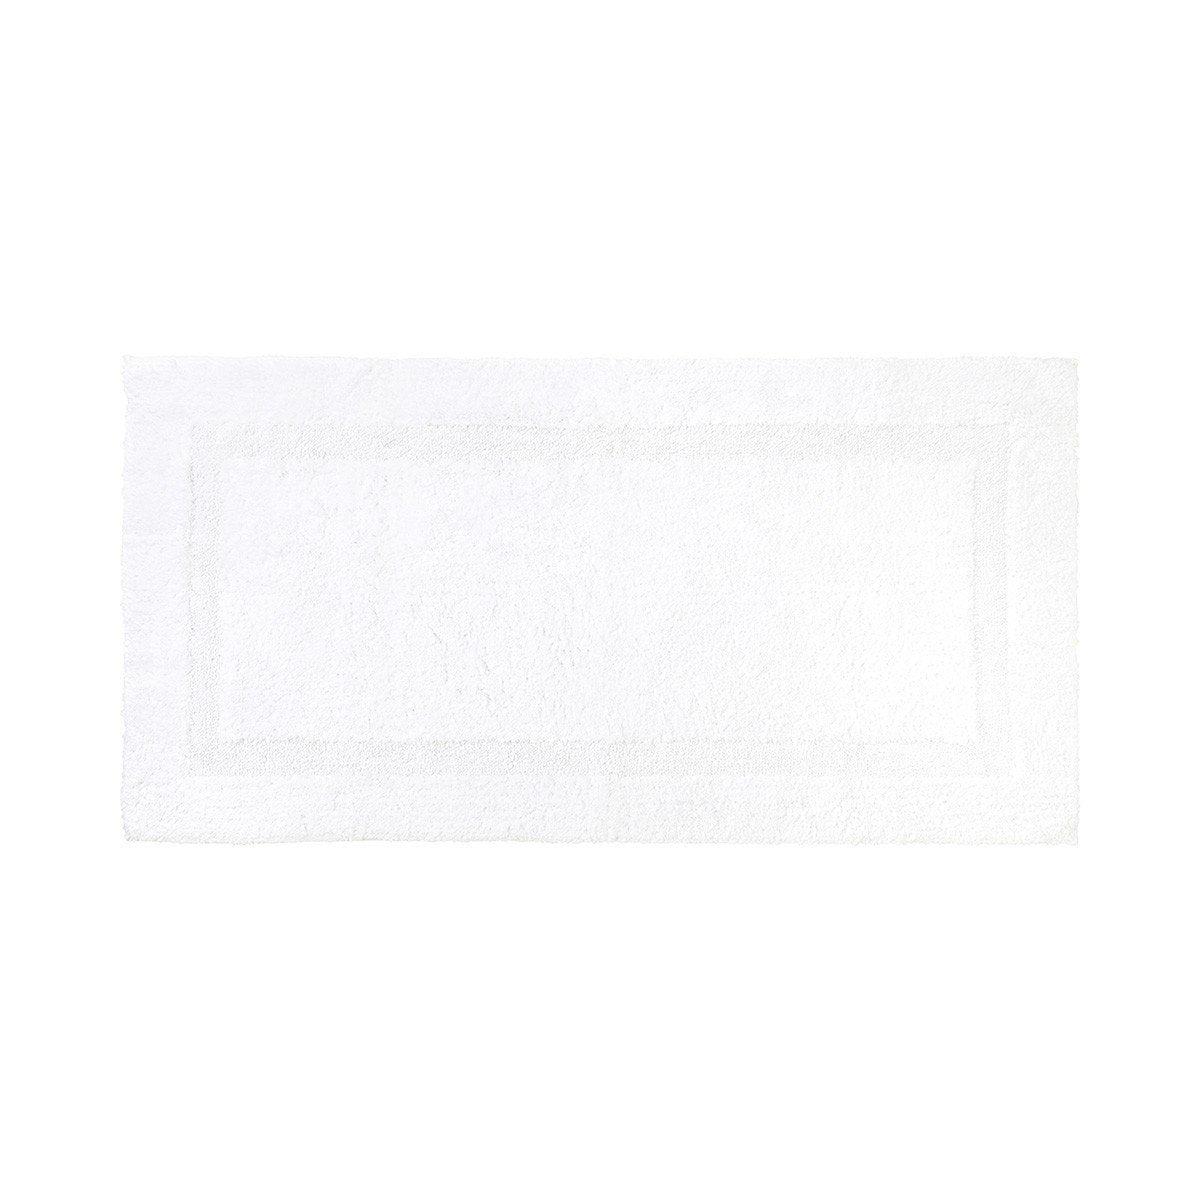 Aquilon Blanc Reversible Bath Rug by Yves Delorme | Fig Linens - White, large bath mat, rug